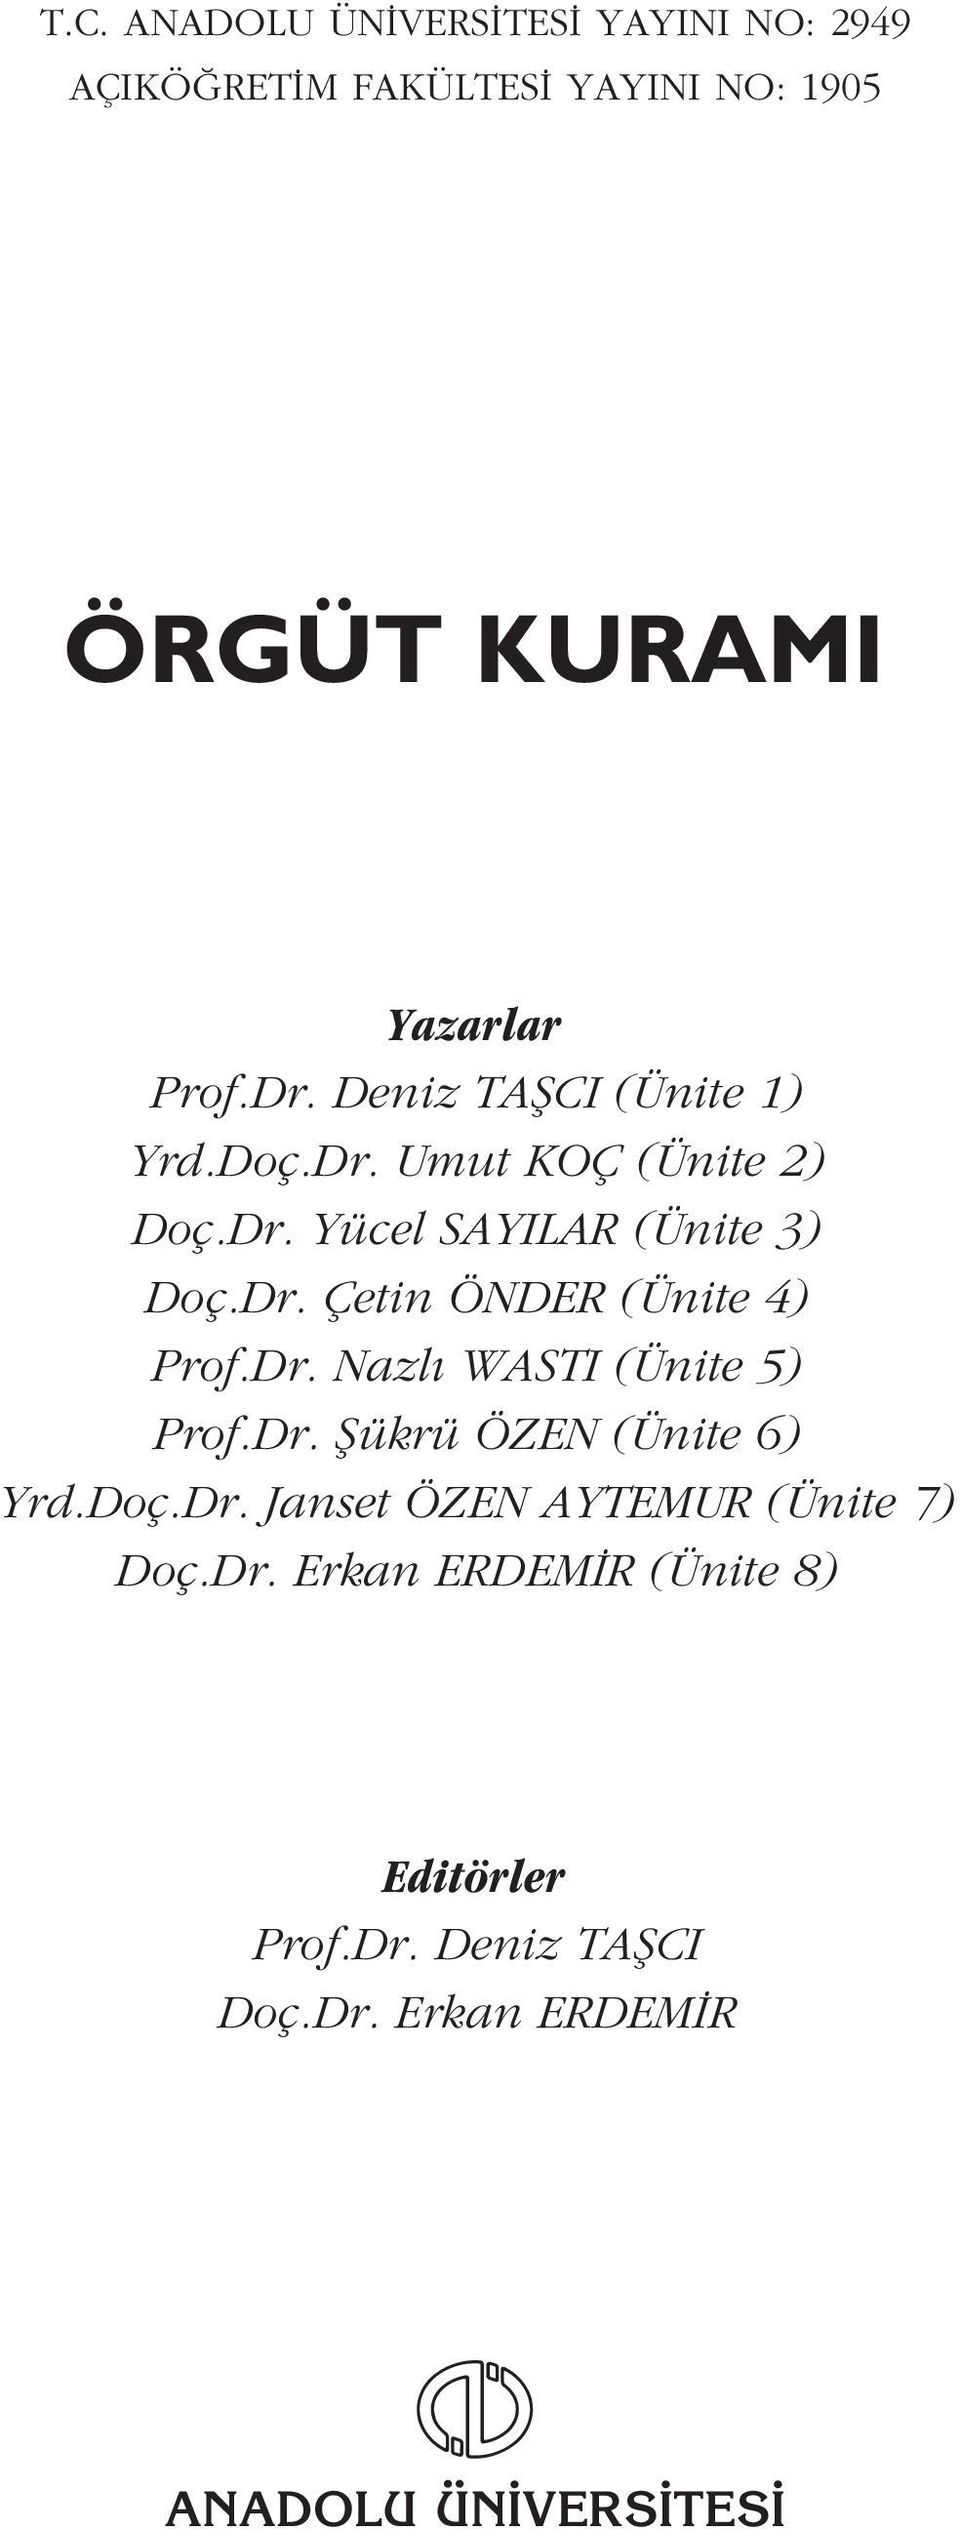 Dr. Nazl WASTI (Ünite 5) Prof.Dr. fiükrü ÖZEN (Ünite 6) Yrd.Doç.Dr. Janset ÖZEN AYTEMUR (Ünite 7) Doç.Dr. Erkan ERDEM R (Ünite 8) Editörler Prof.